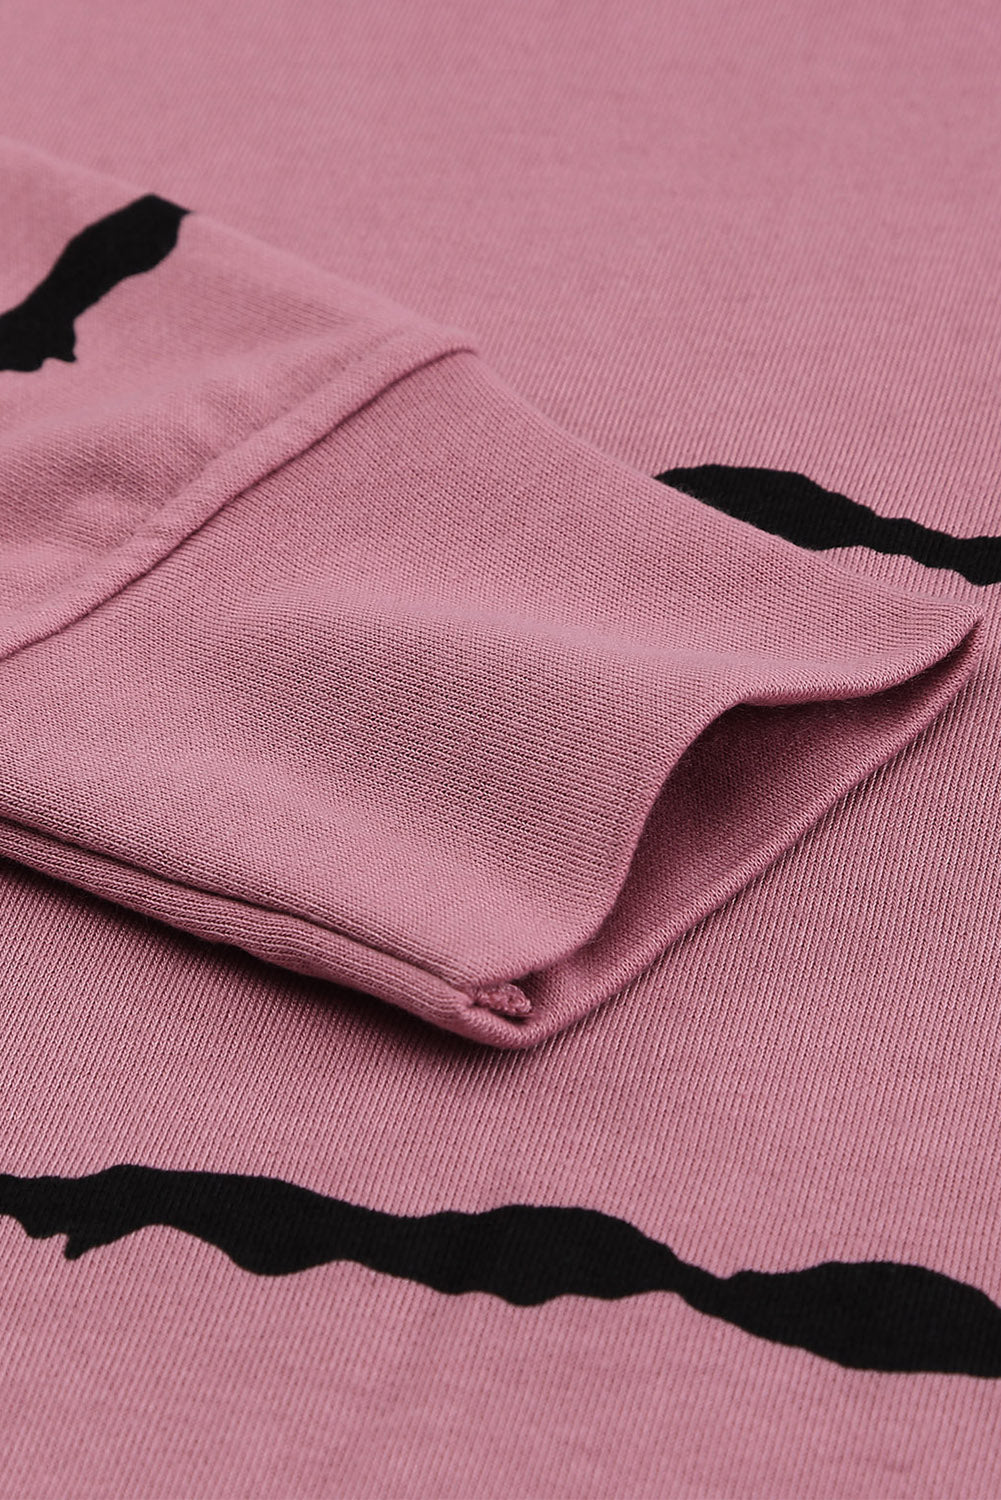 Pink Tie-dye Striped Drawstring Hoodie with Side Split Tops Sweatshirts & Hoodies JT's Designer Fashion